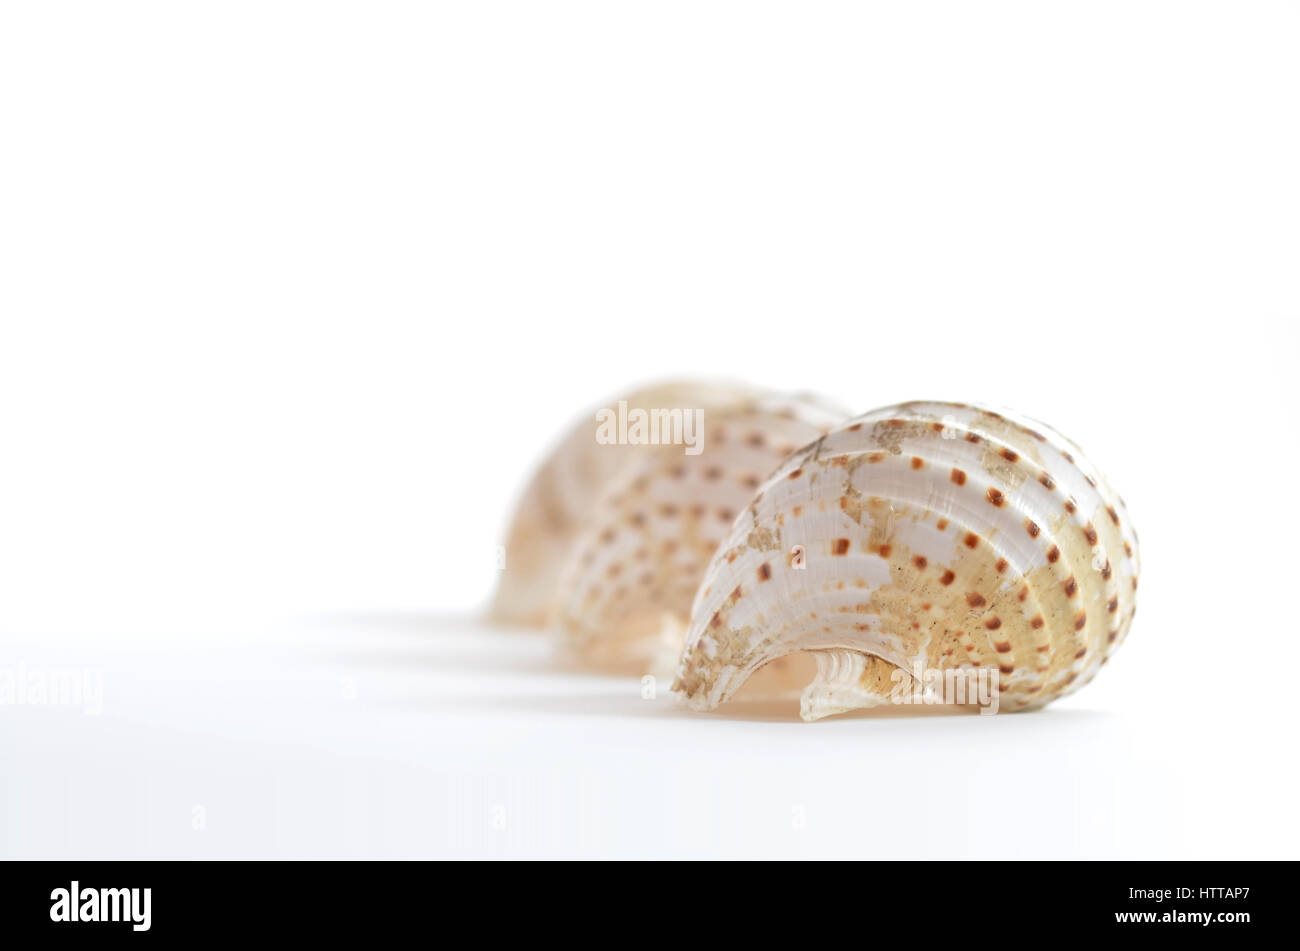 Two shells of Giant Tun snails (Tonna galea) Stock Photo